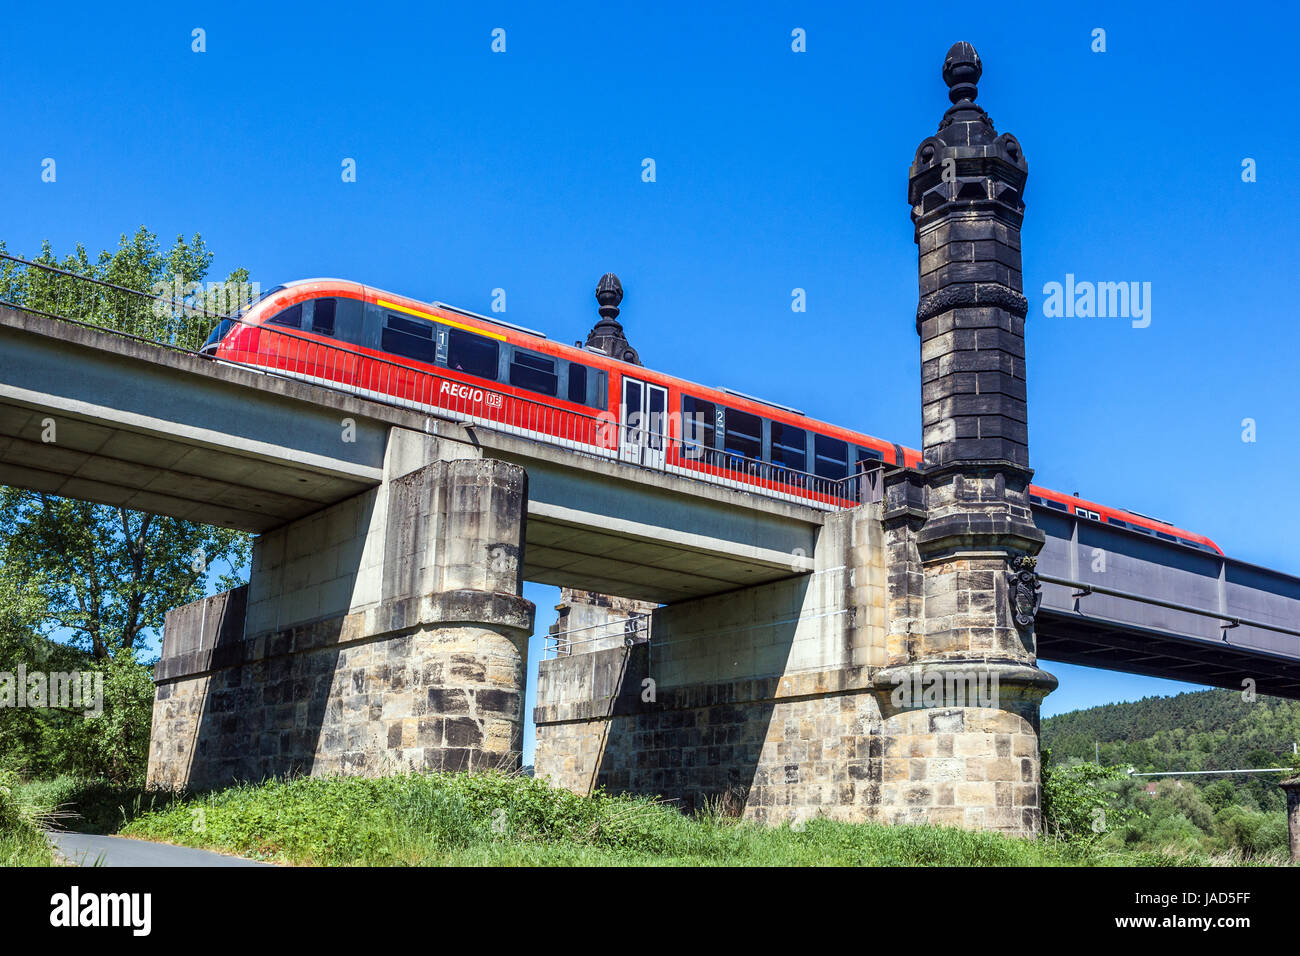 Regional train passing railway bridge, Bad Schandau, Saxon Switzerland Germany Elbe valley bridge Stock Photo